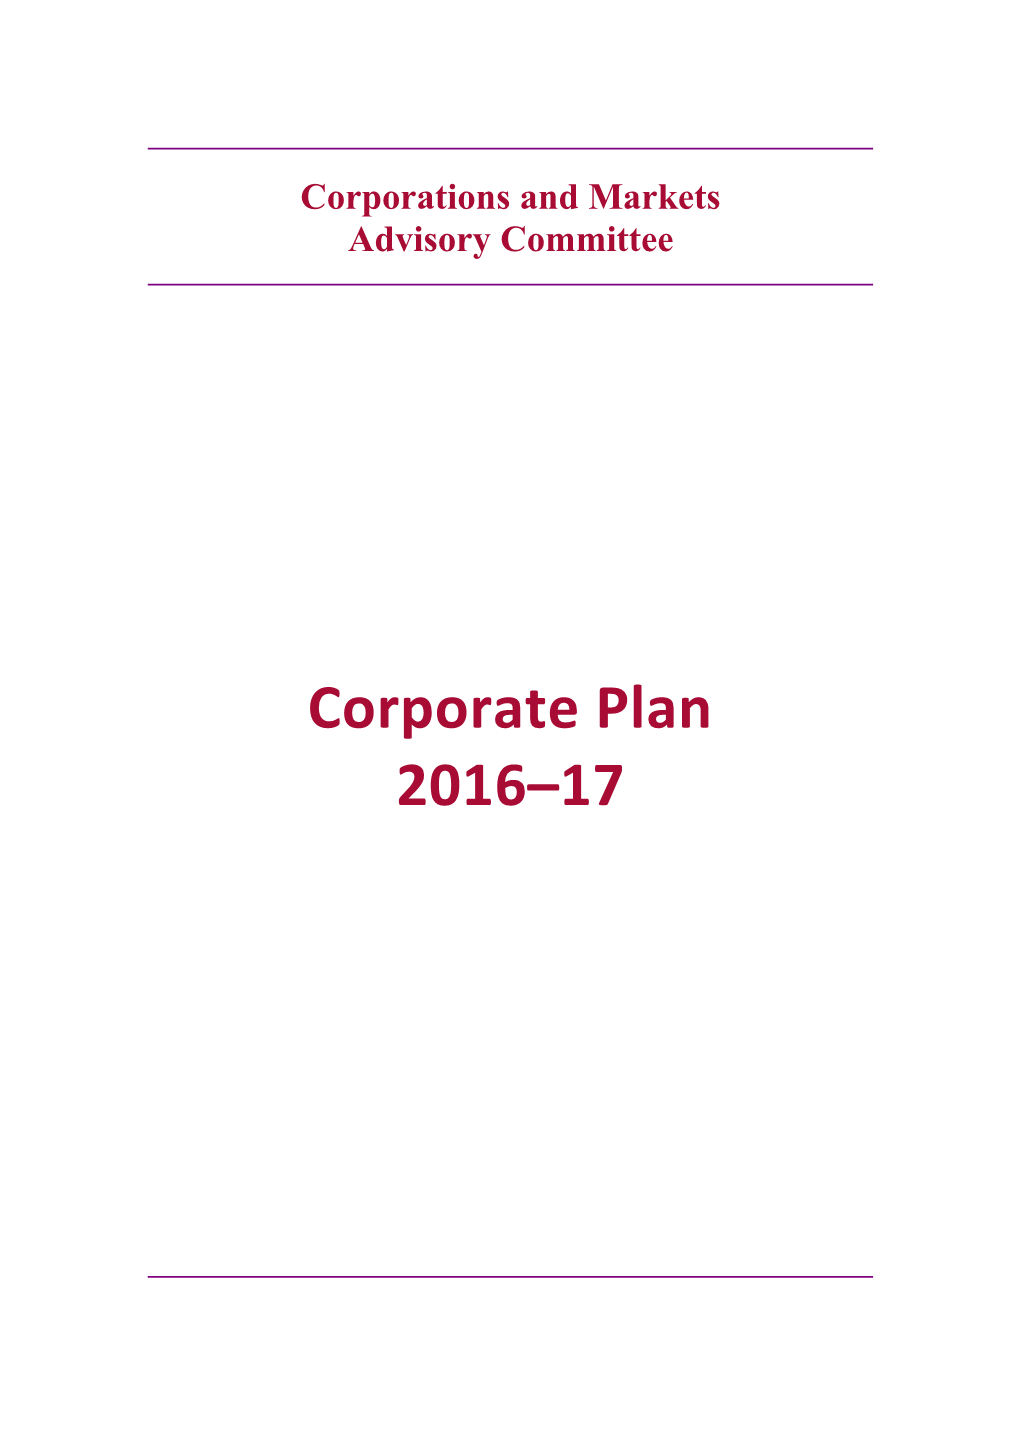 CAMAC Corporate Plan 2016-17